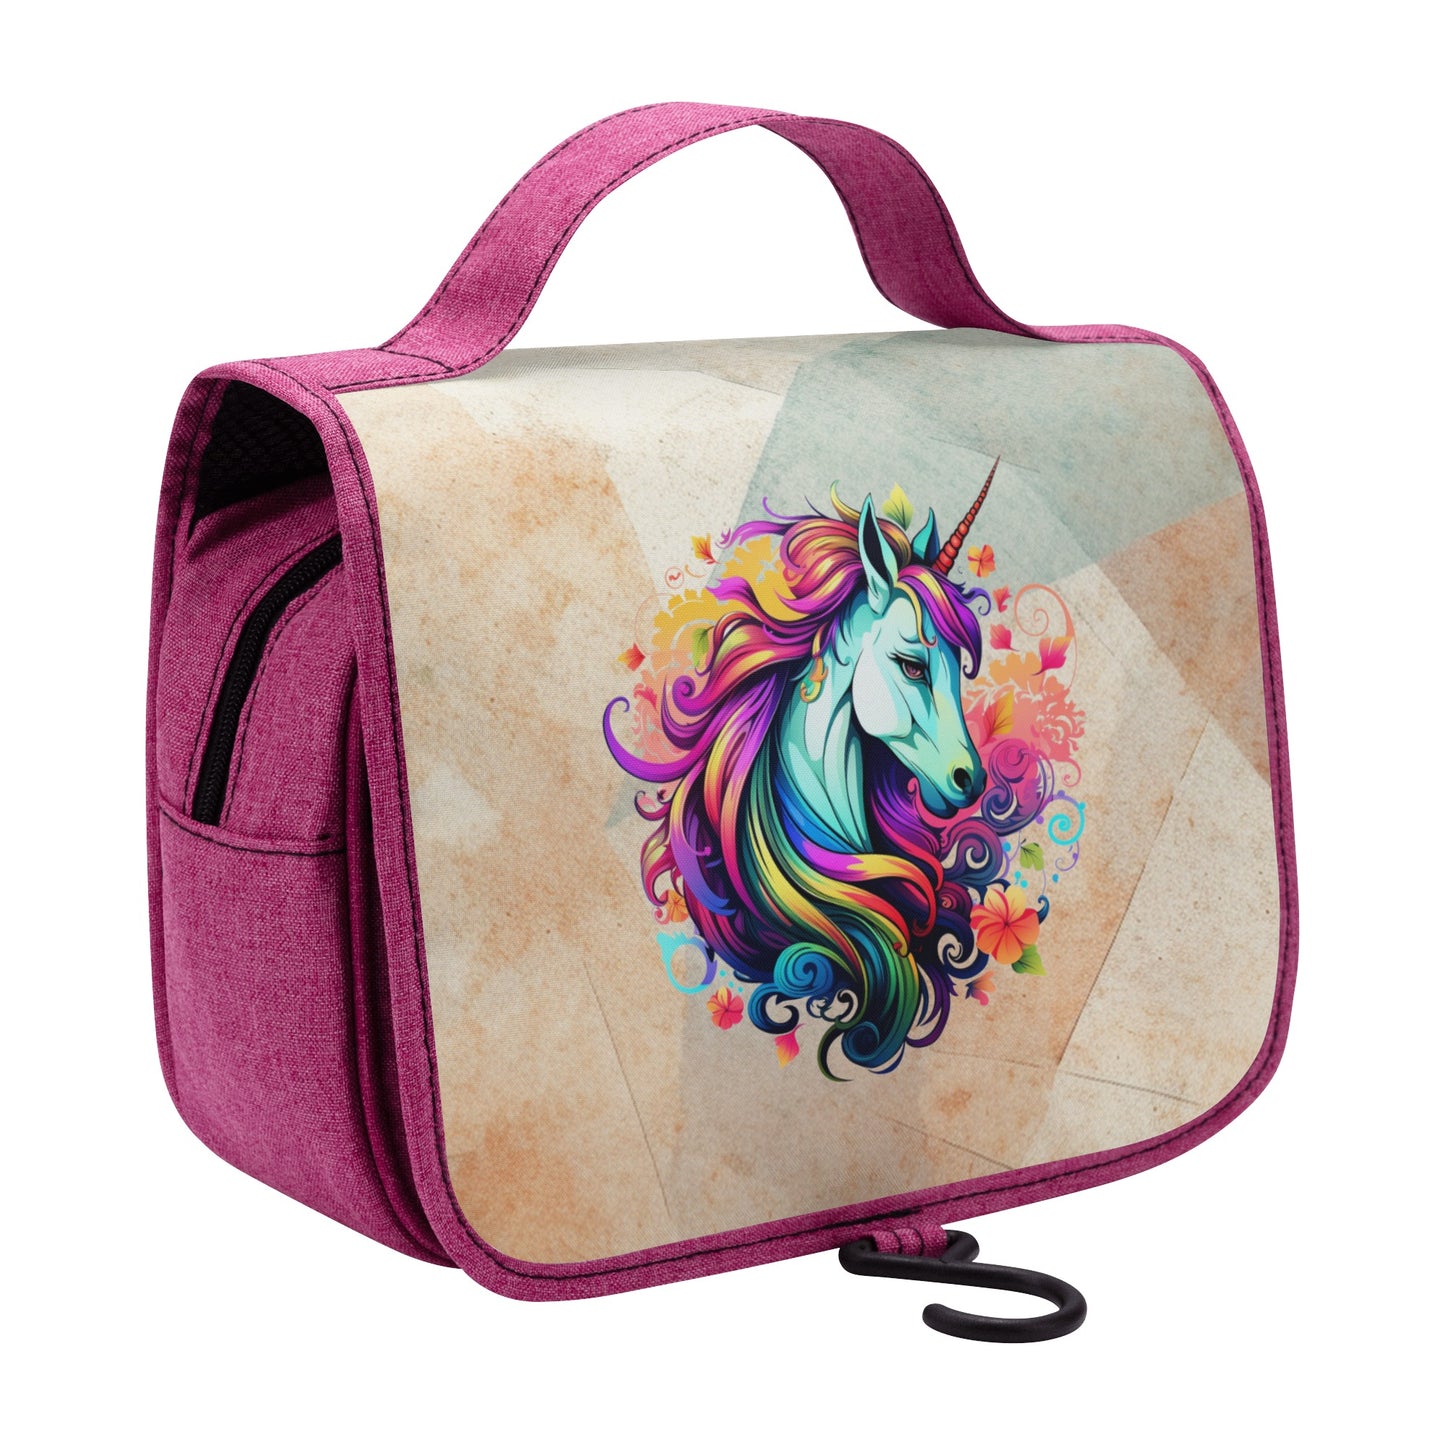 Neduz Unicorn Toiletry Bag for Travel and Gym